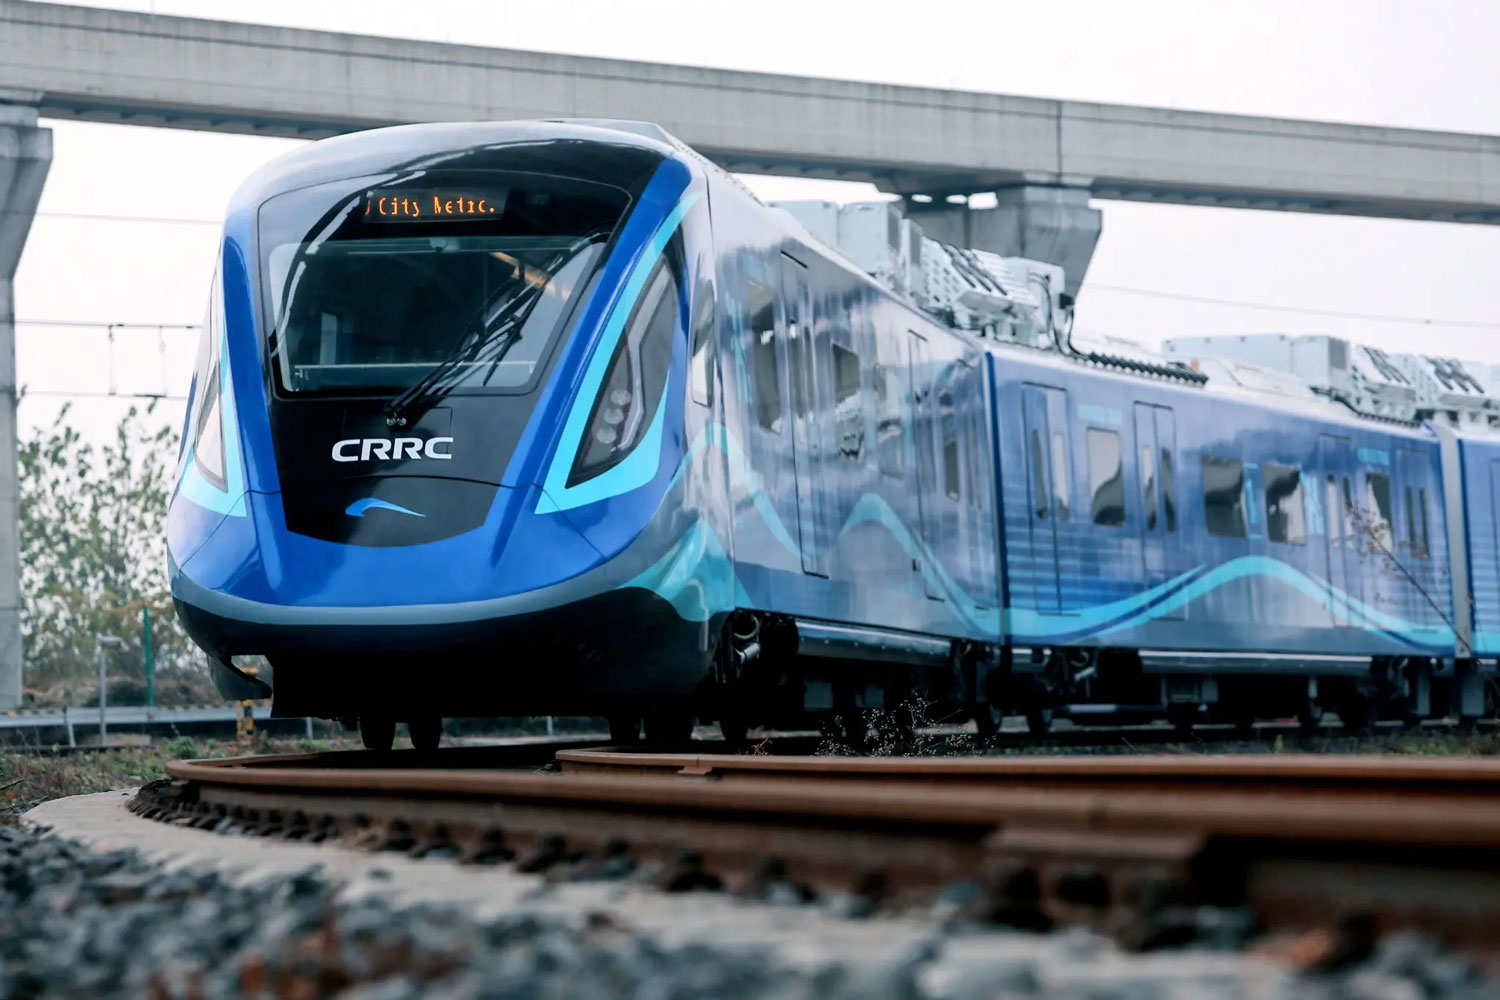 Ce train à hydrogène chinois annonce une efficience record